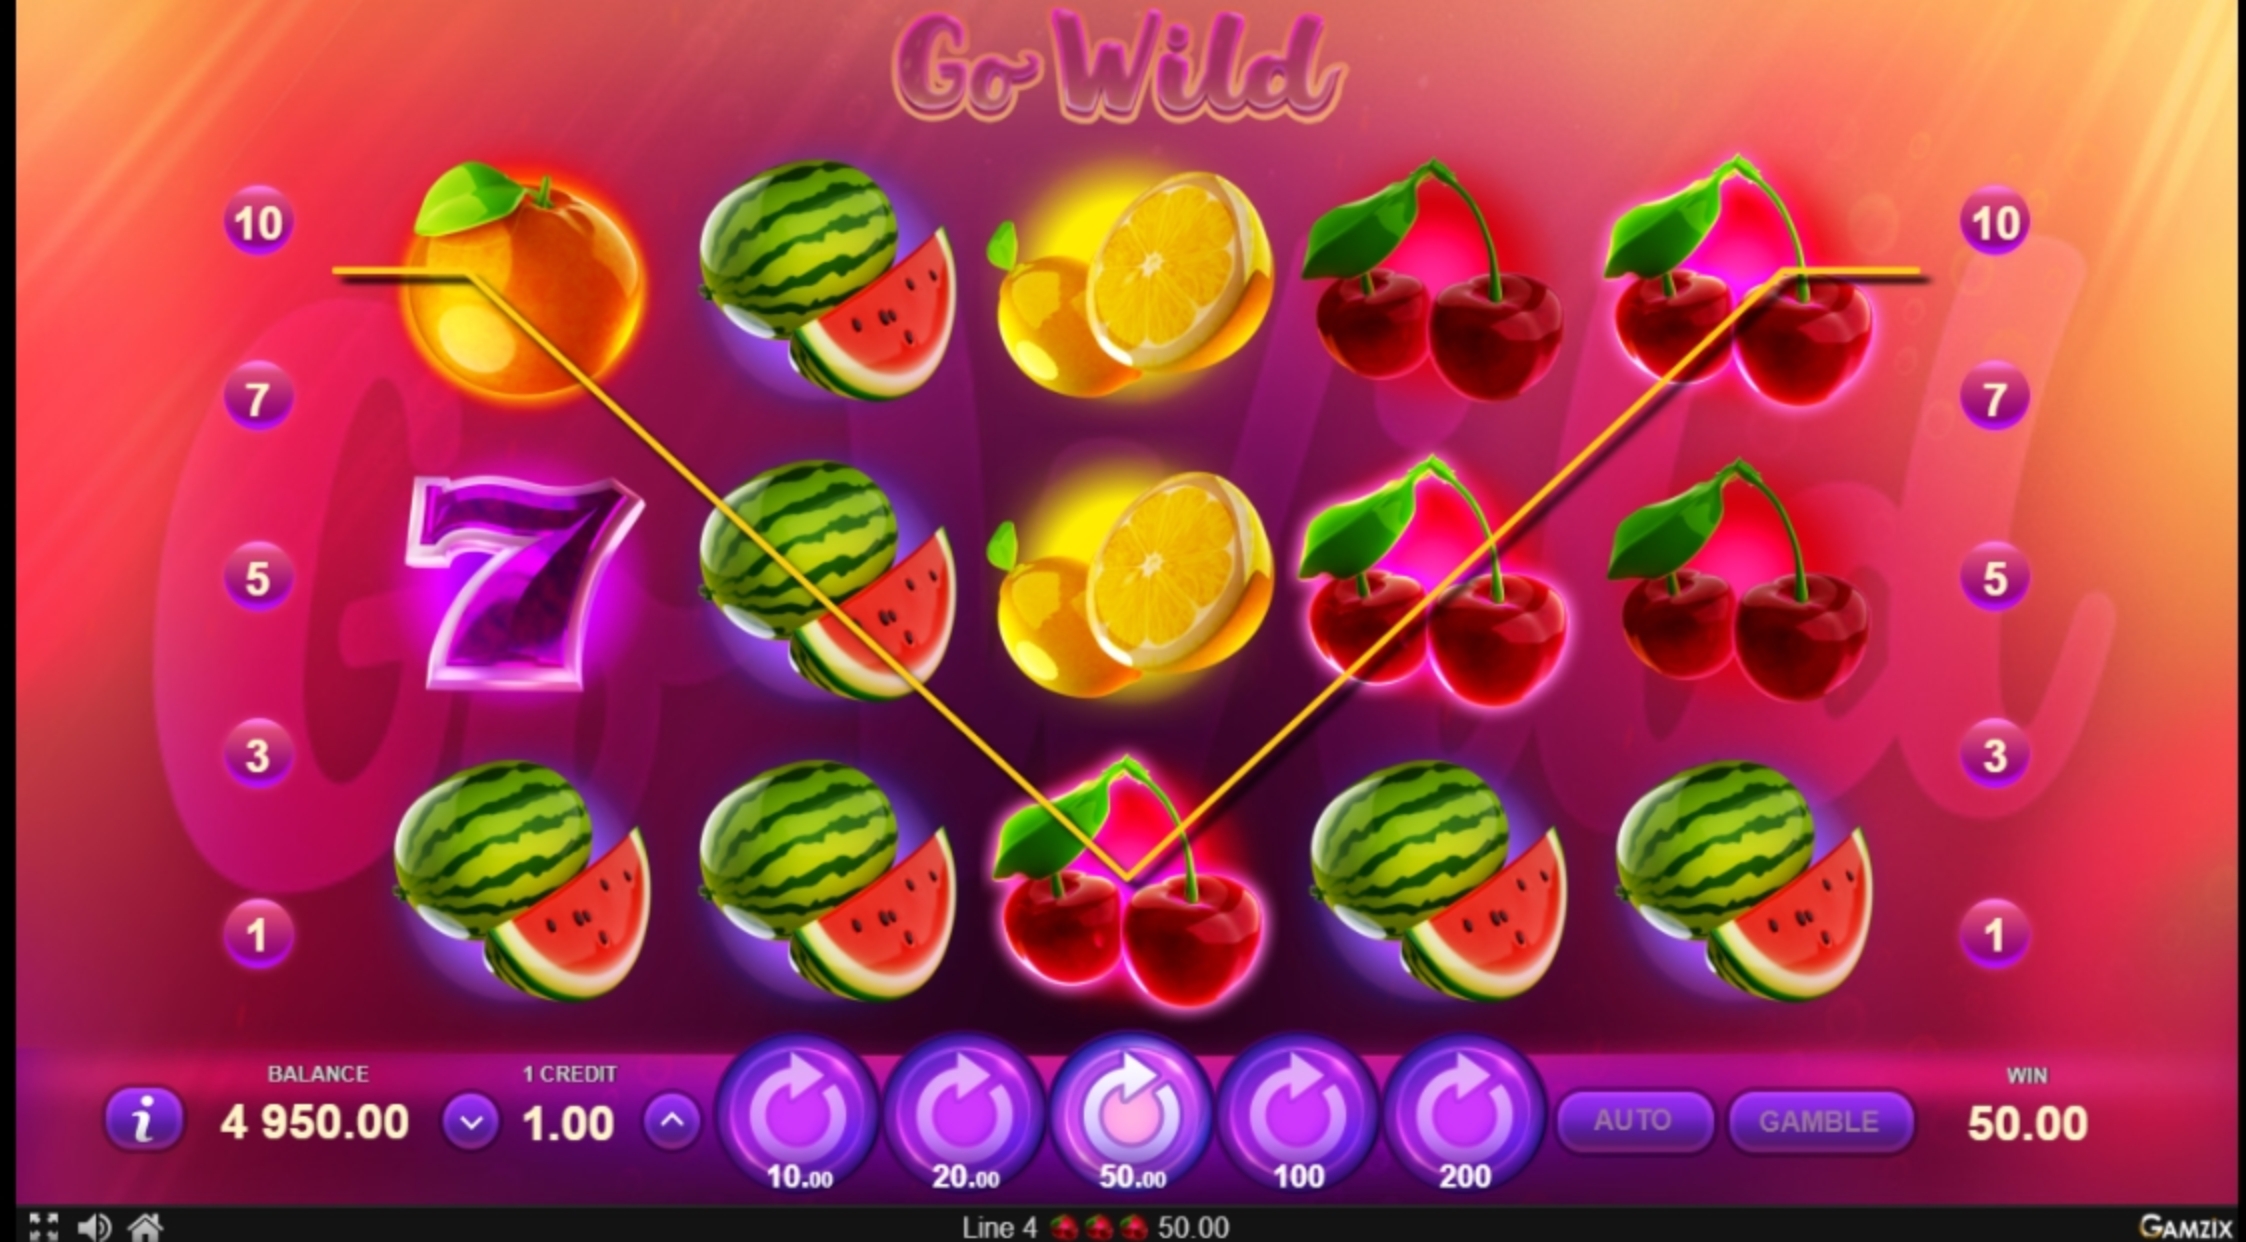 Win Money in Go Wild Free Slot Game by Gamzix